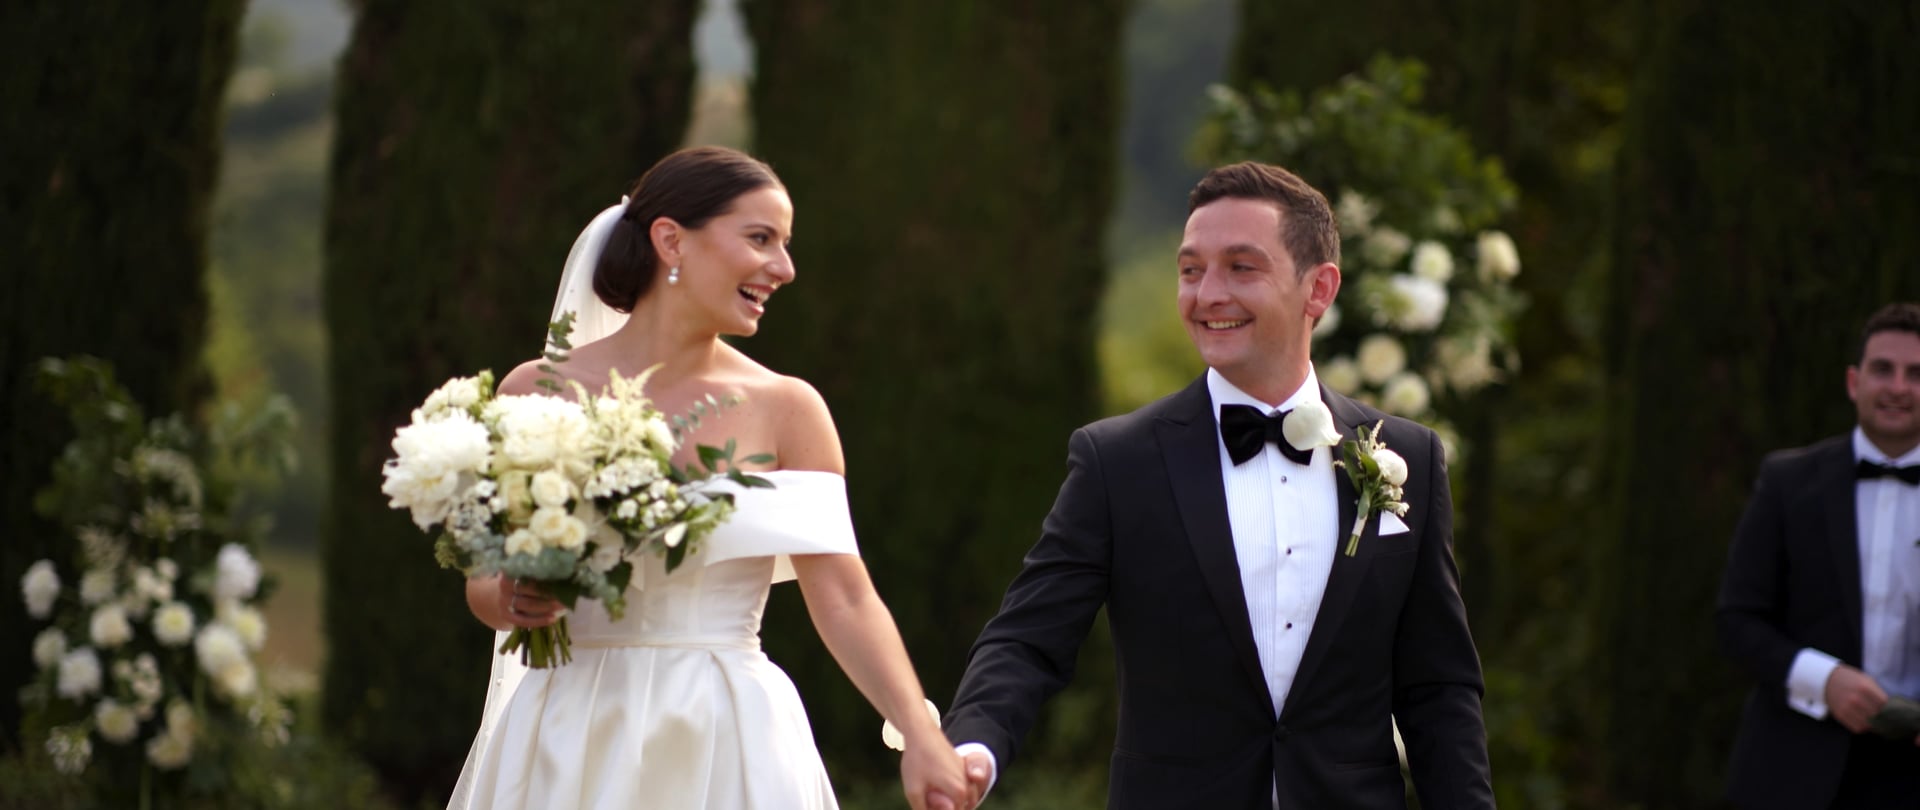 Daniela & Will Wedding Video Filmed at Tuscany, Italy